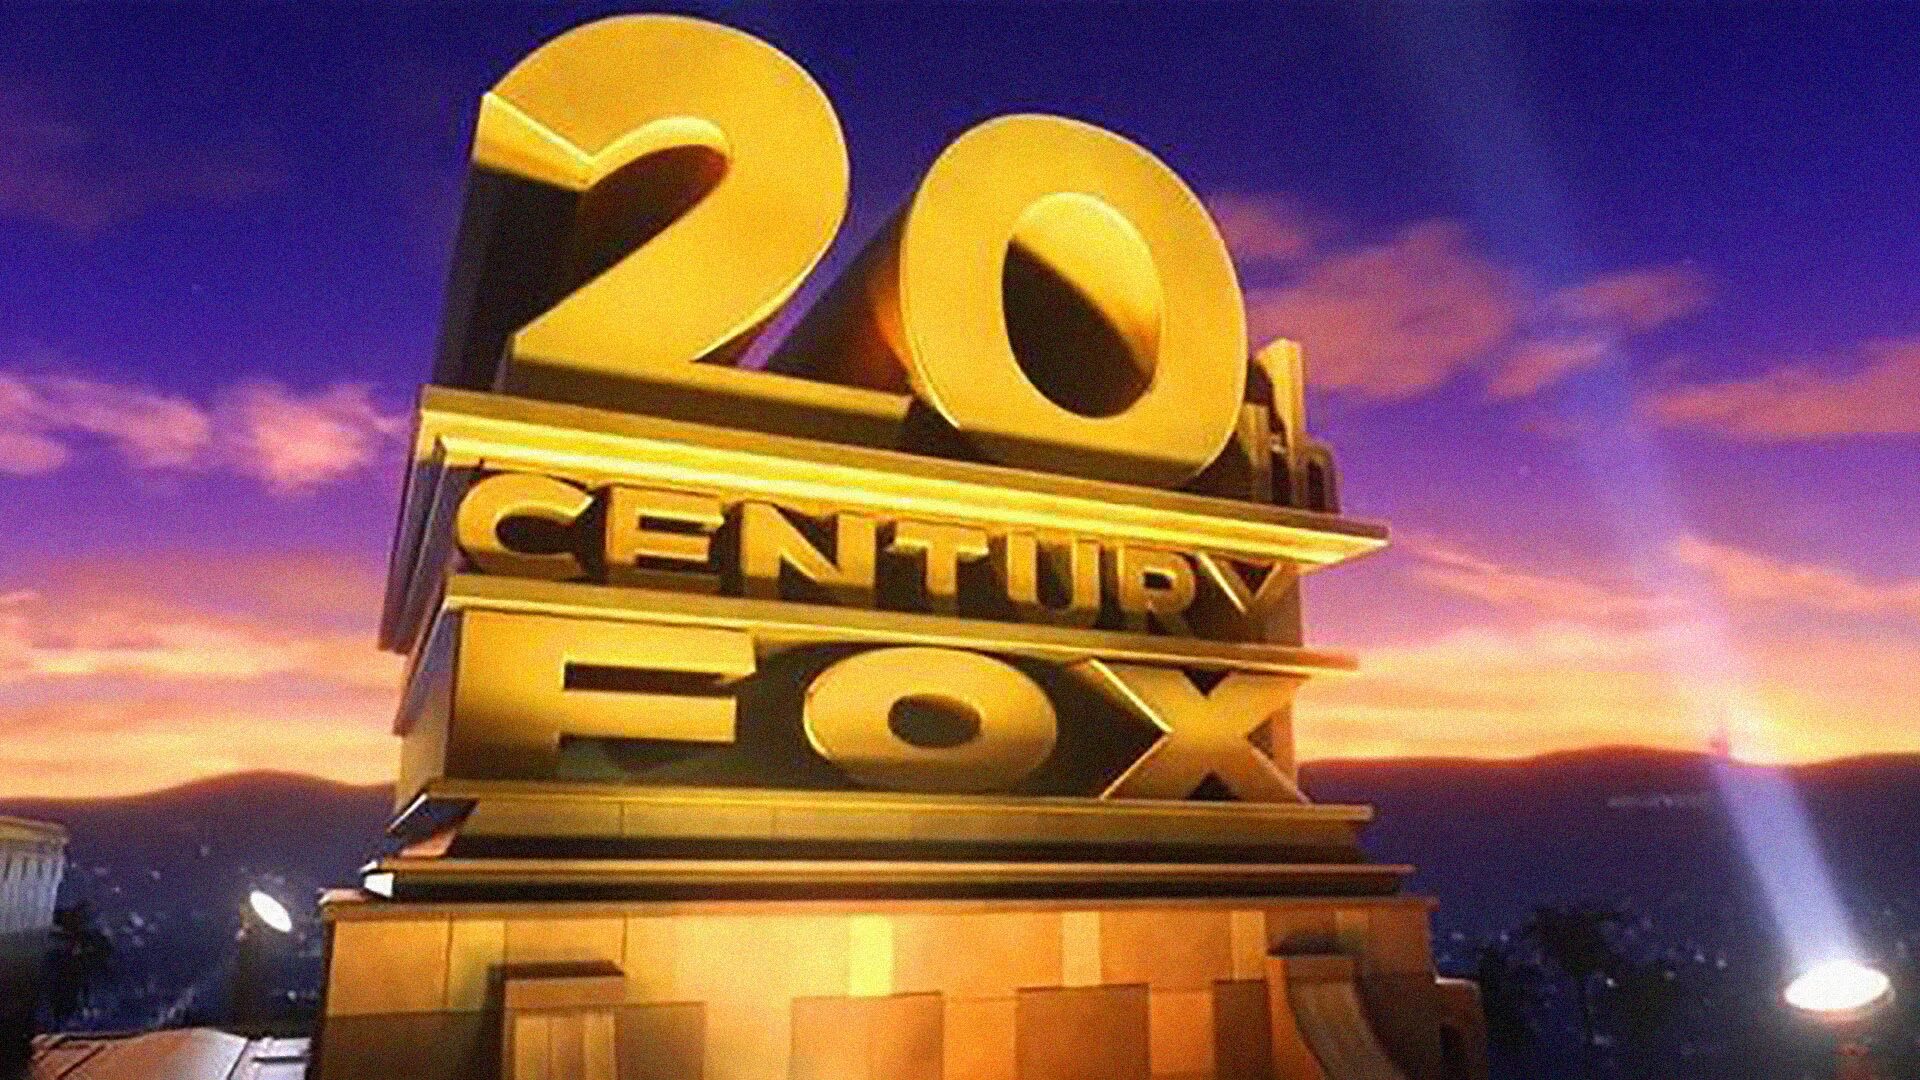 Двадцатый век Фокс студия. 20th Century Fox Rio. 20 Век Центури Фокс. 20 Век Фокс Пикчерз. Th fox